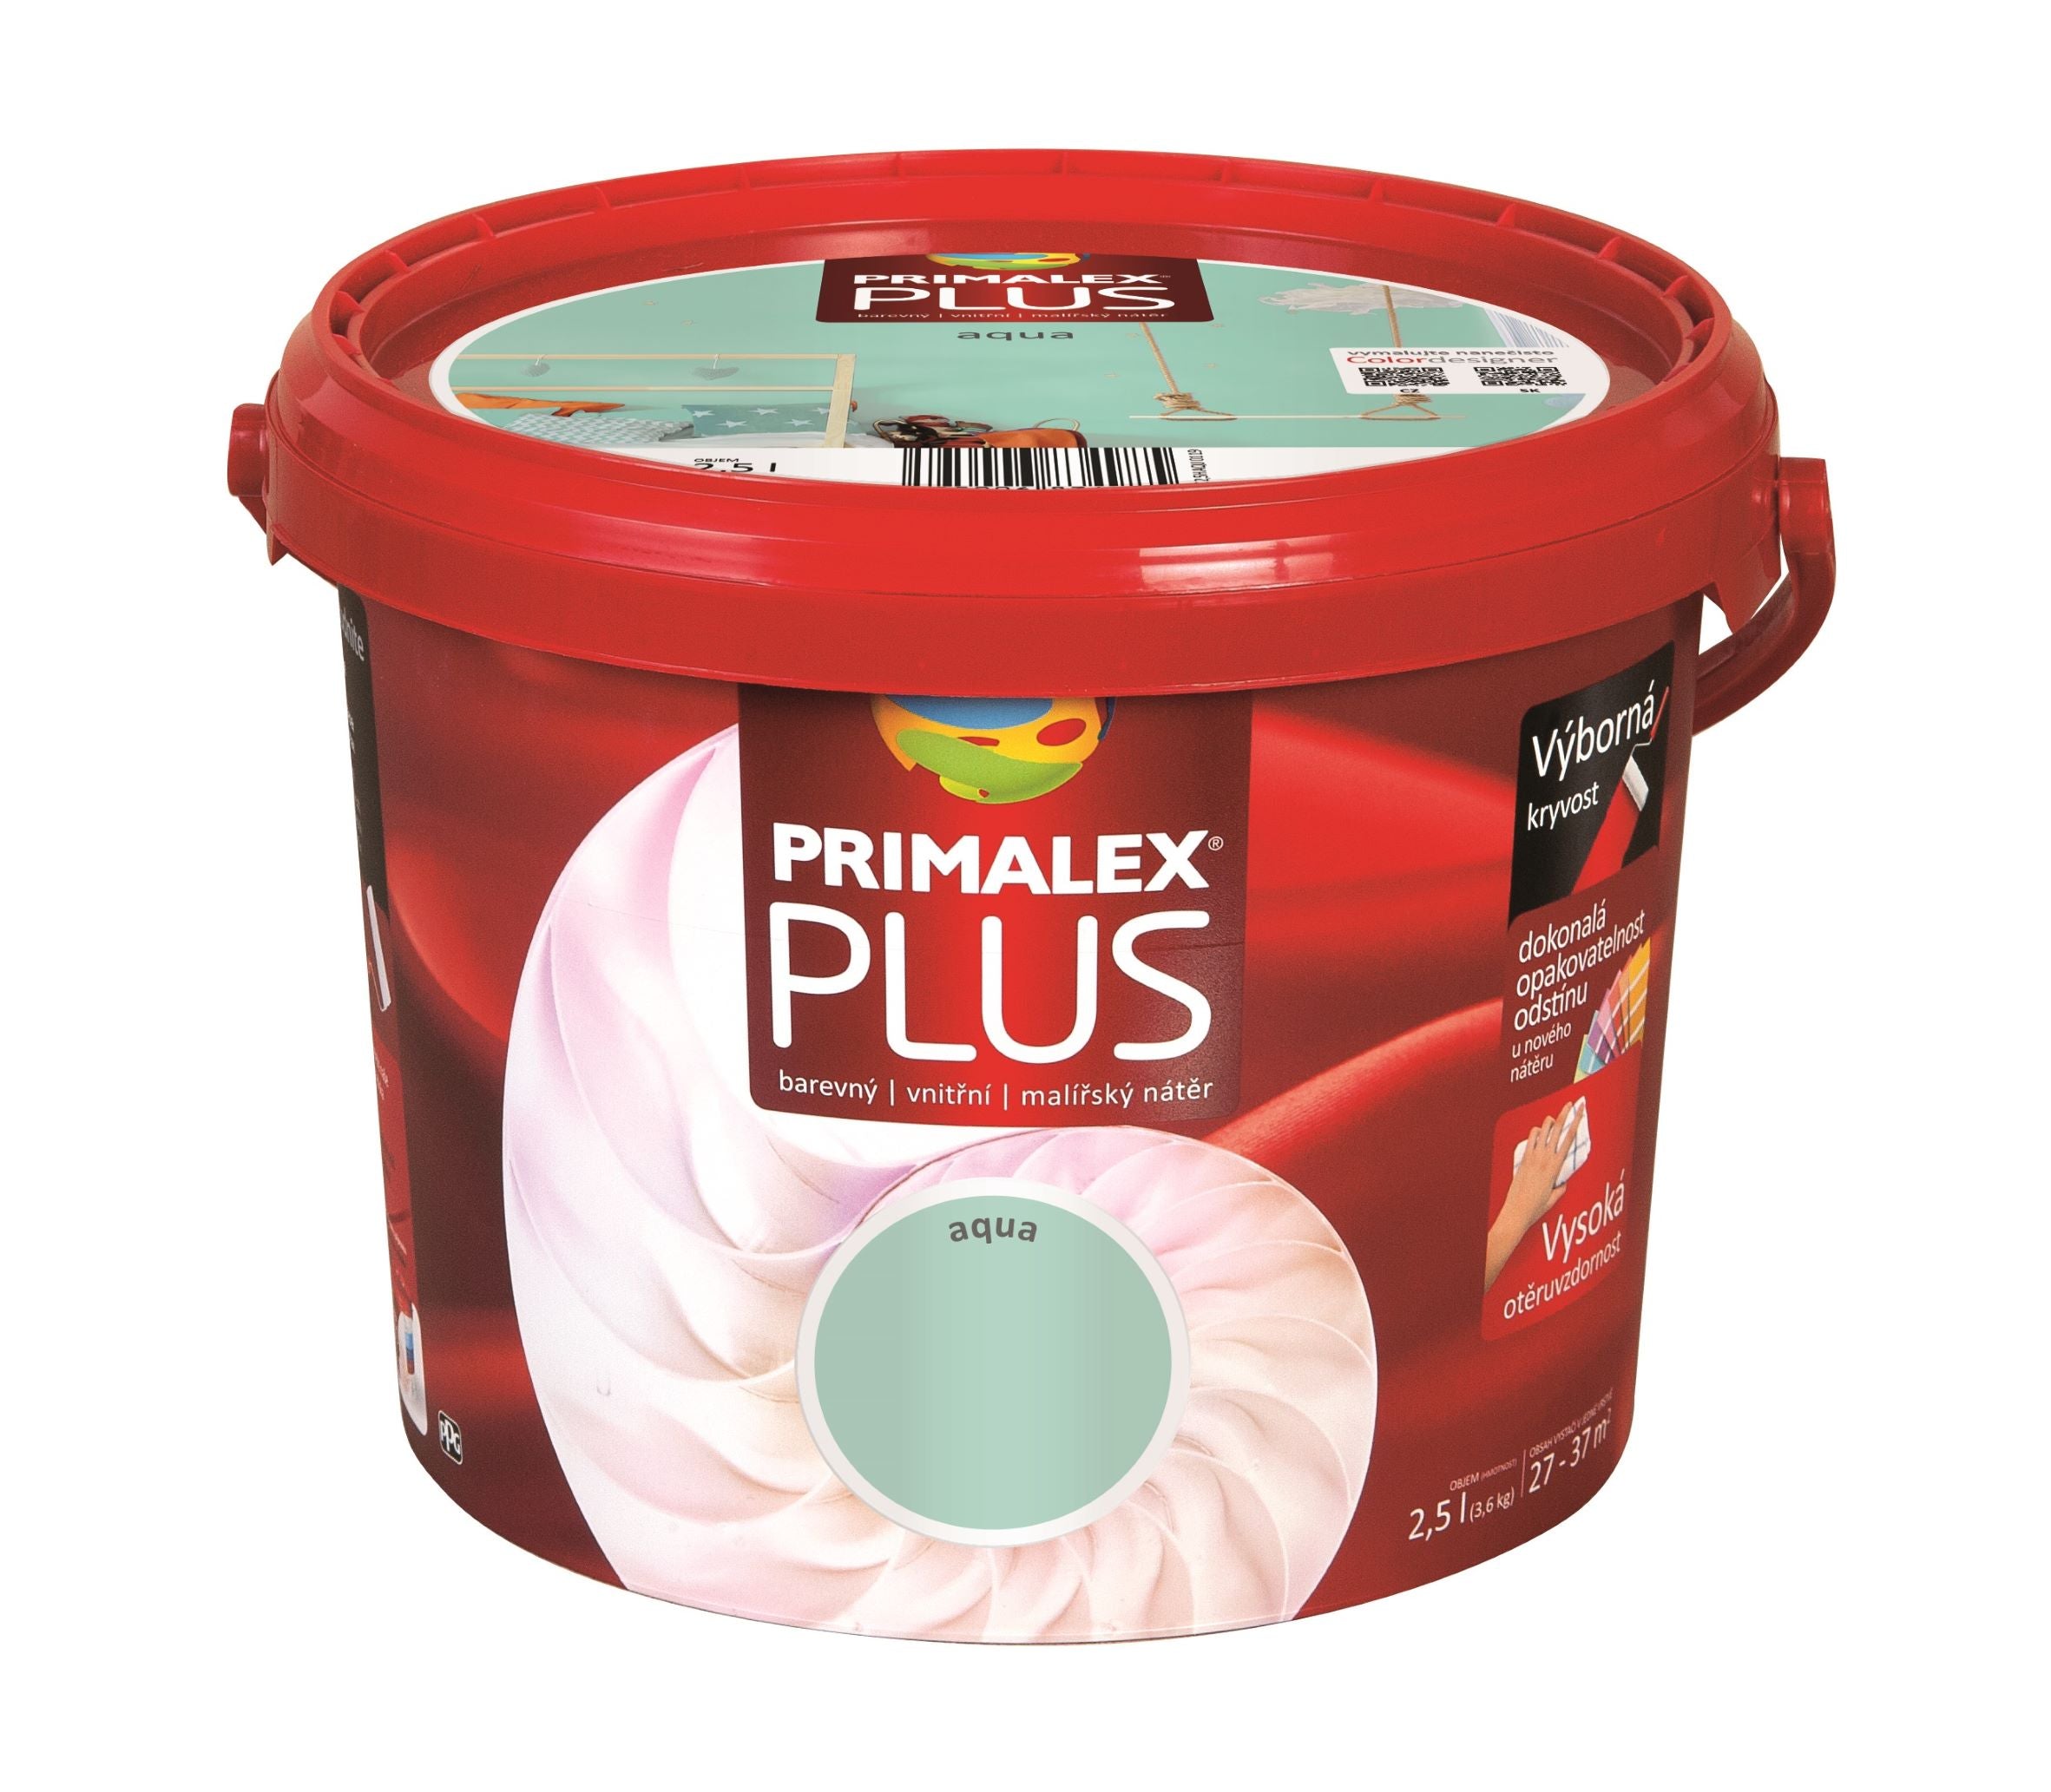 PRIMALEX PLUS farebný maliarska farba do interiéru 2,5 l